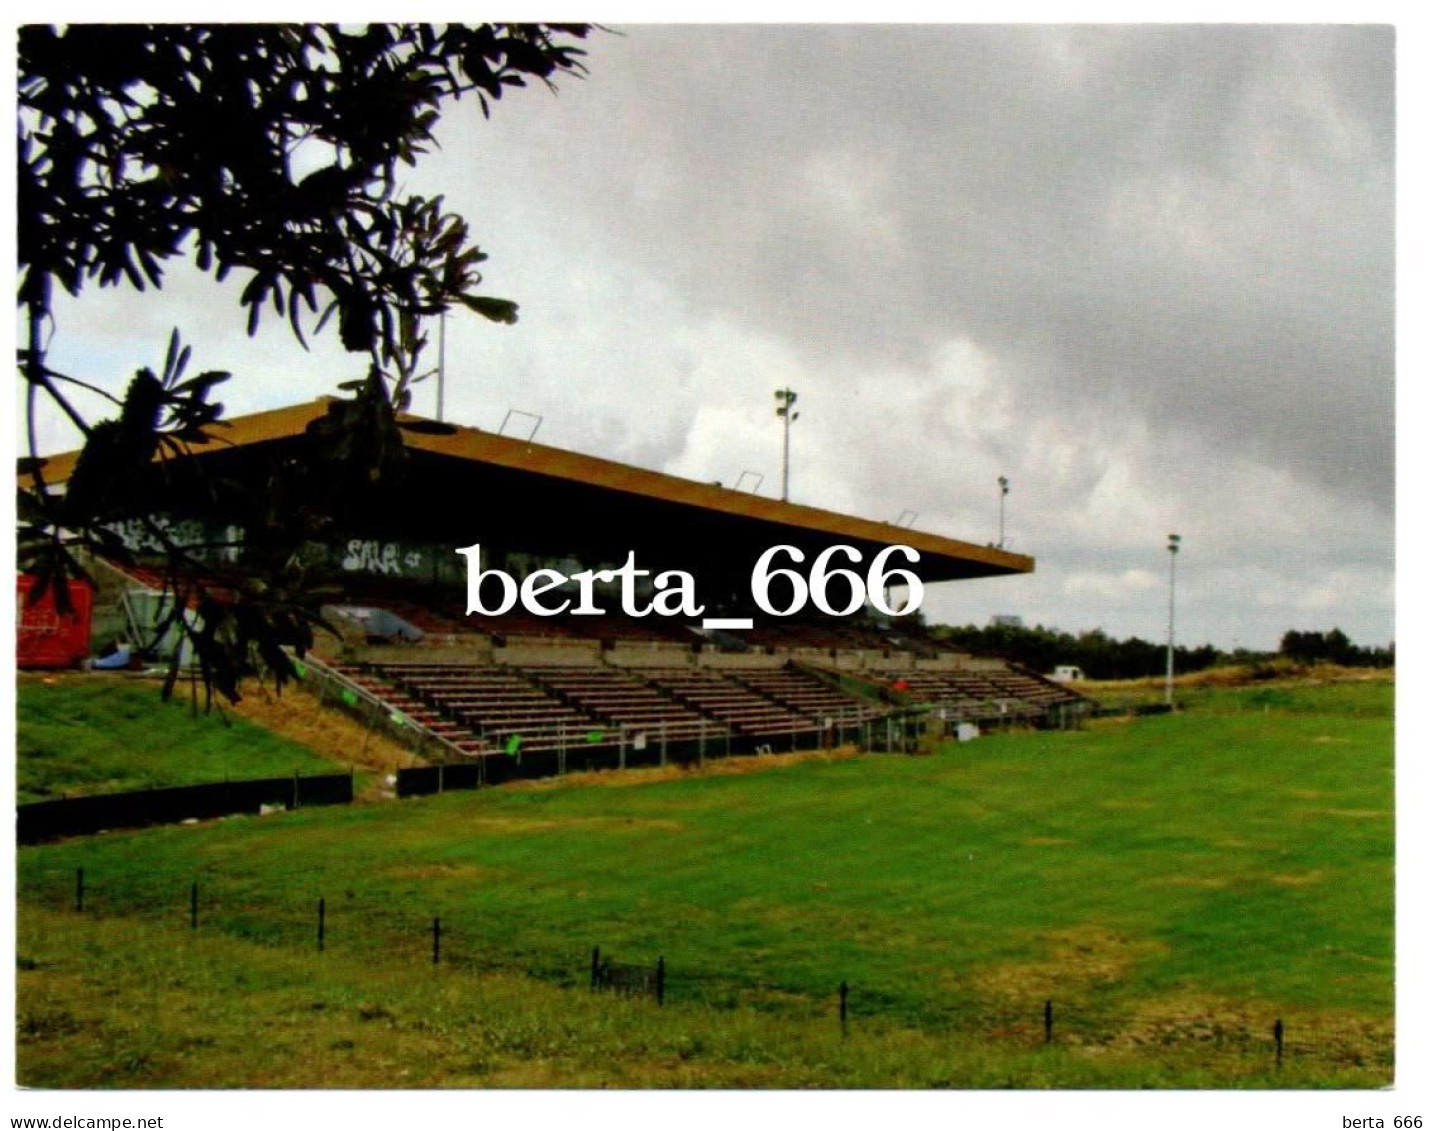 Australia New South Wales St George Stadium - Estadios